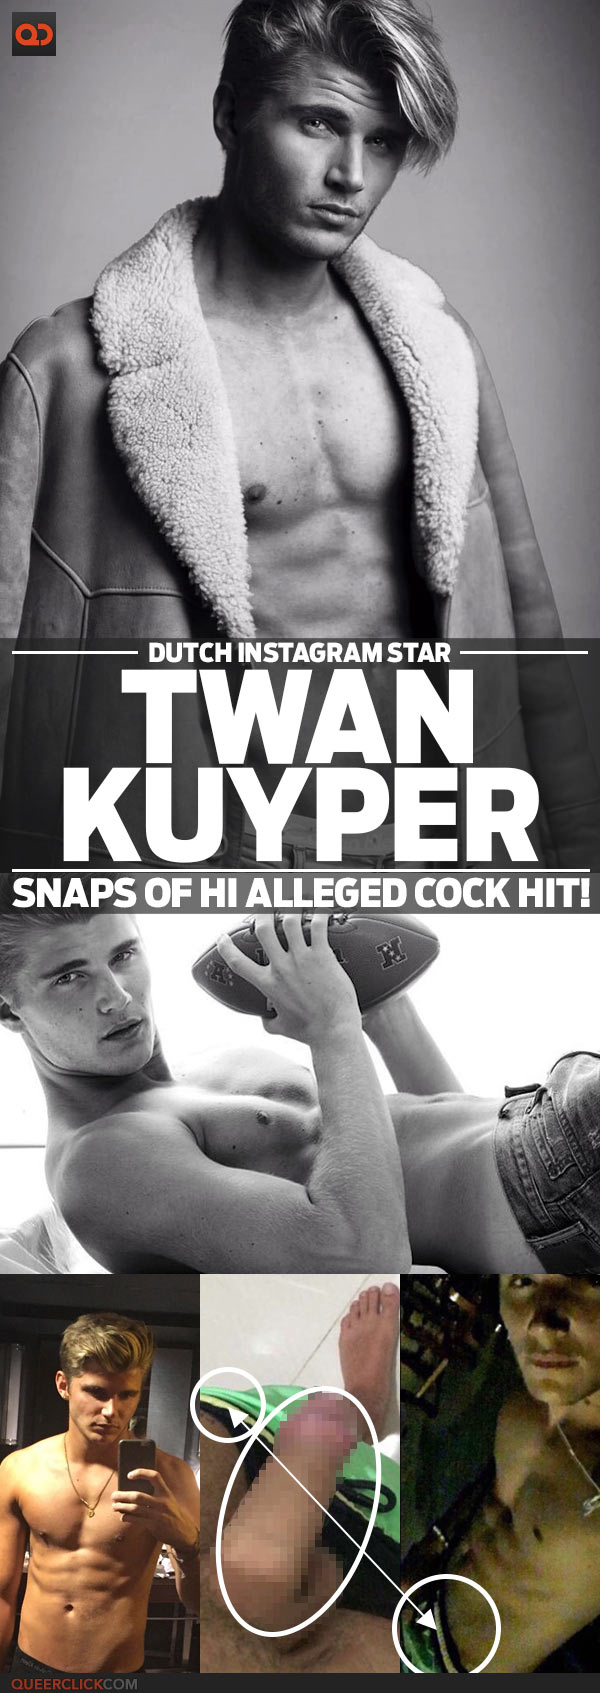 Twan Kuyper, Dutch Instagram Star, Snaps Of Hi Alleged Cock Hit!